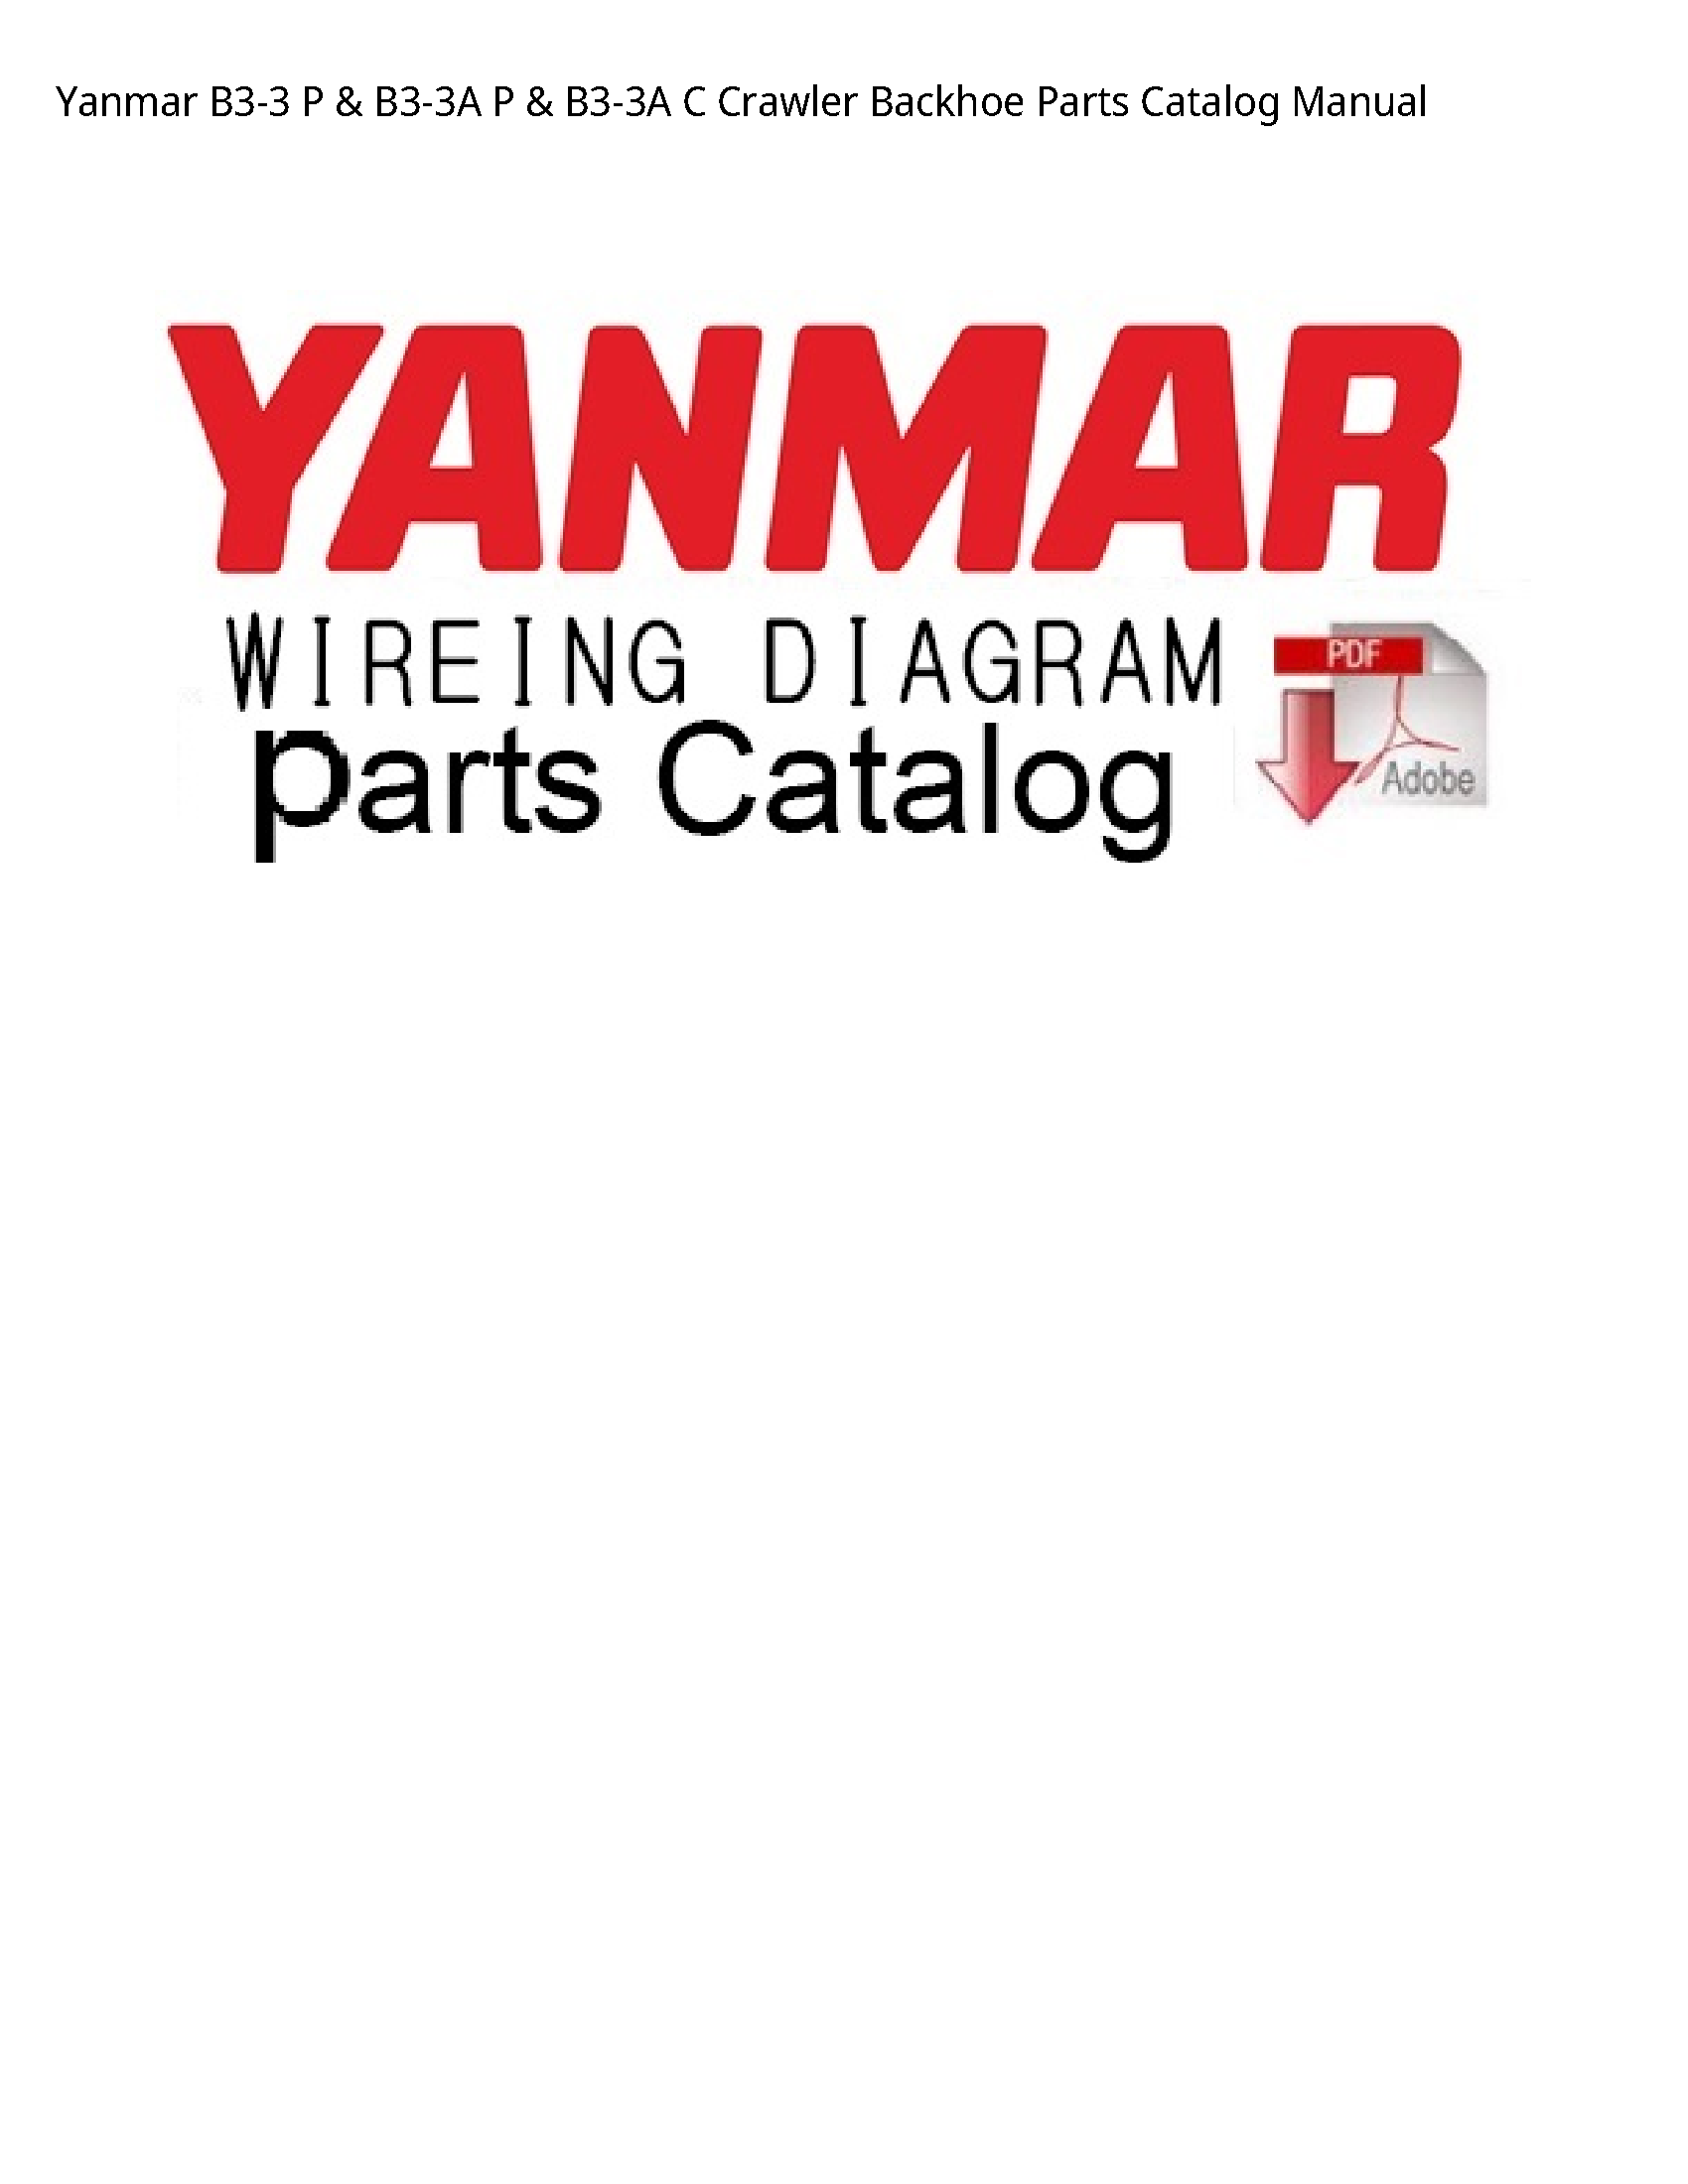 Yanmar B3-3 Crawler Backhoe Parts Catalog manual